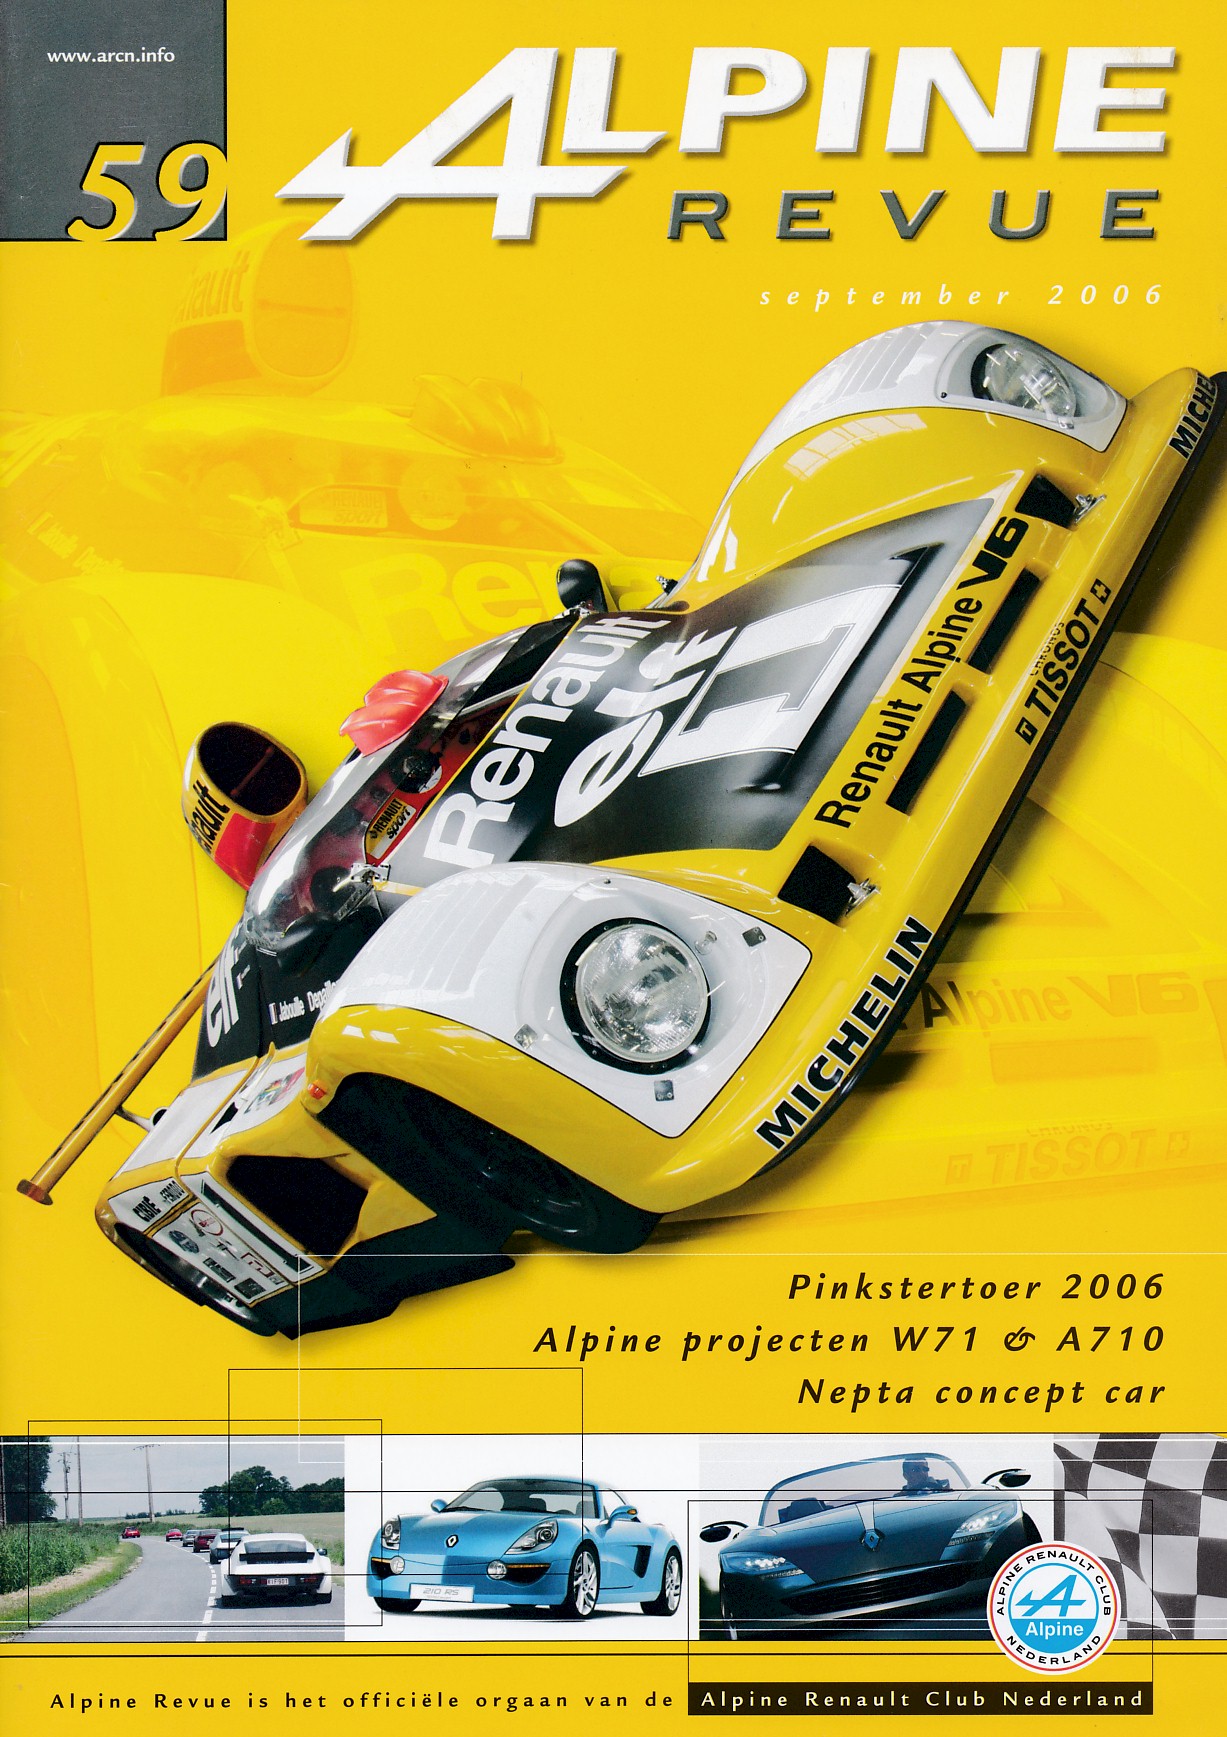 Revue, Alpine - Clubblad van de ARCN (Alpine Renault Club Nederland), nummer-59, september 2006